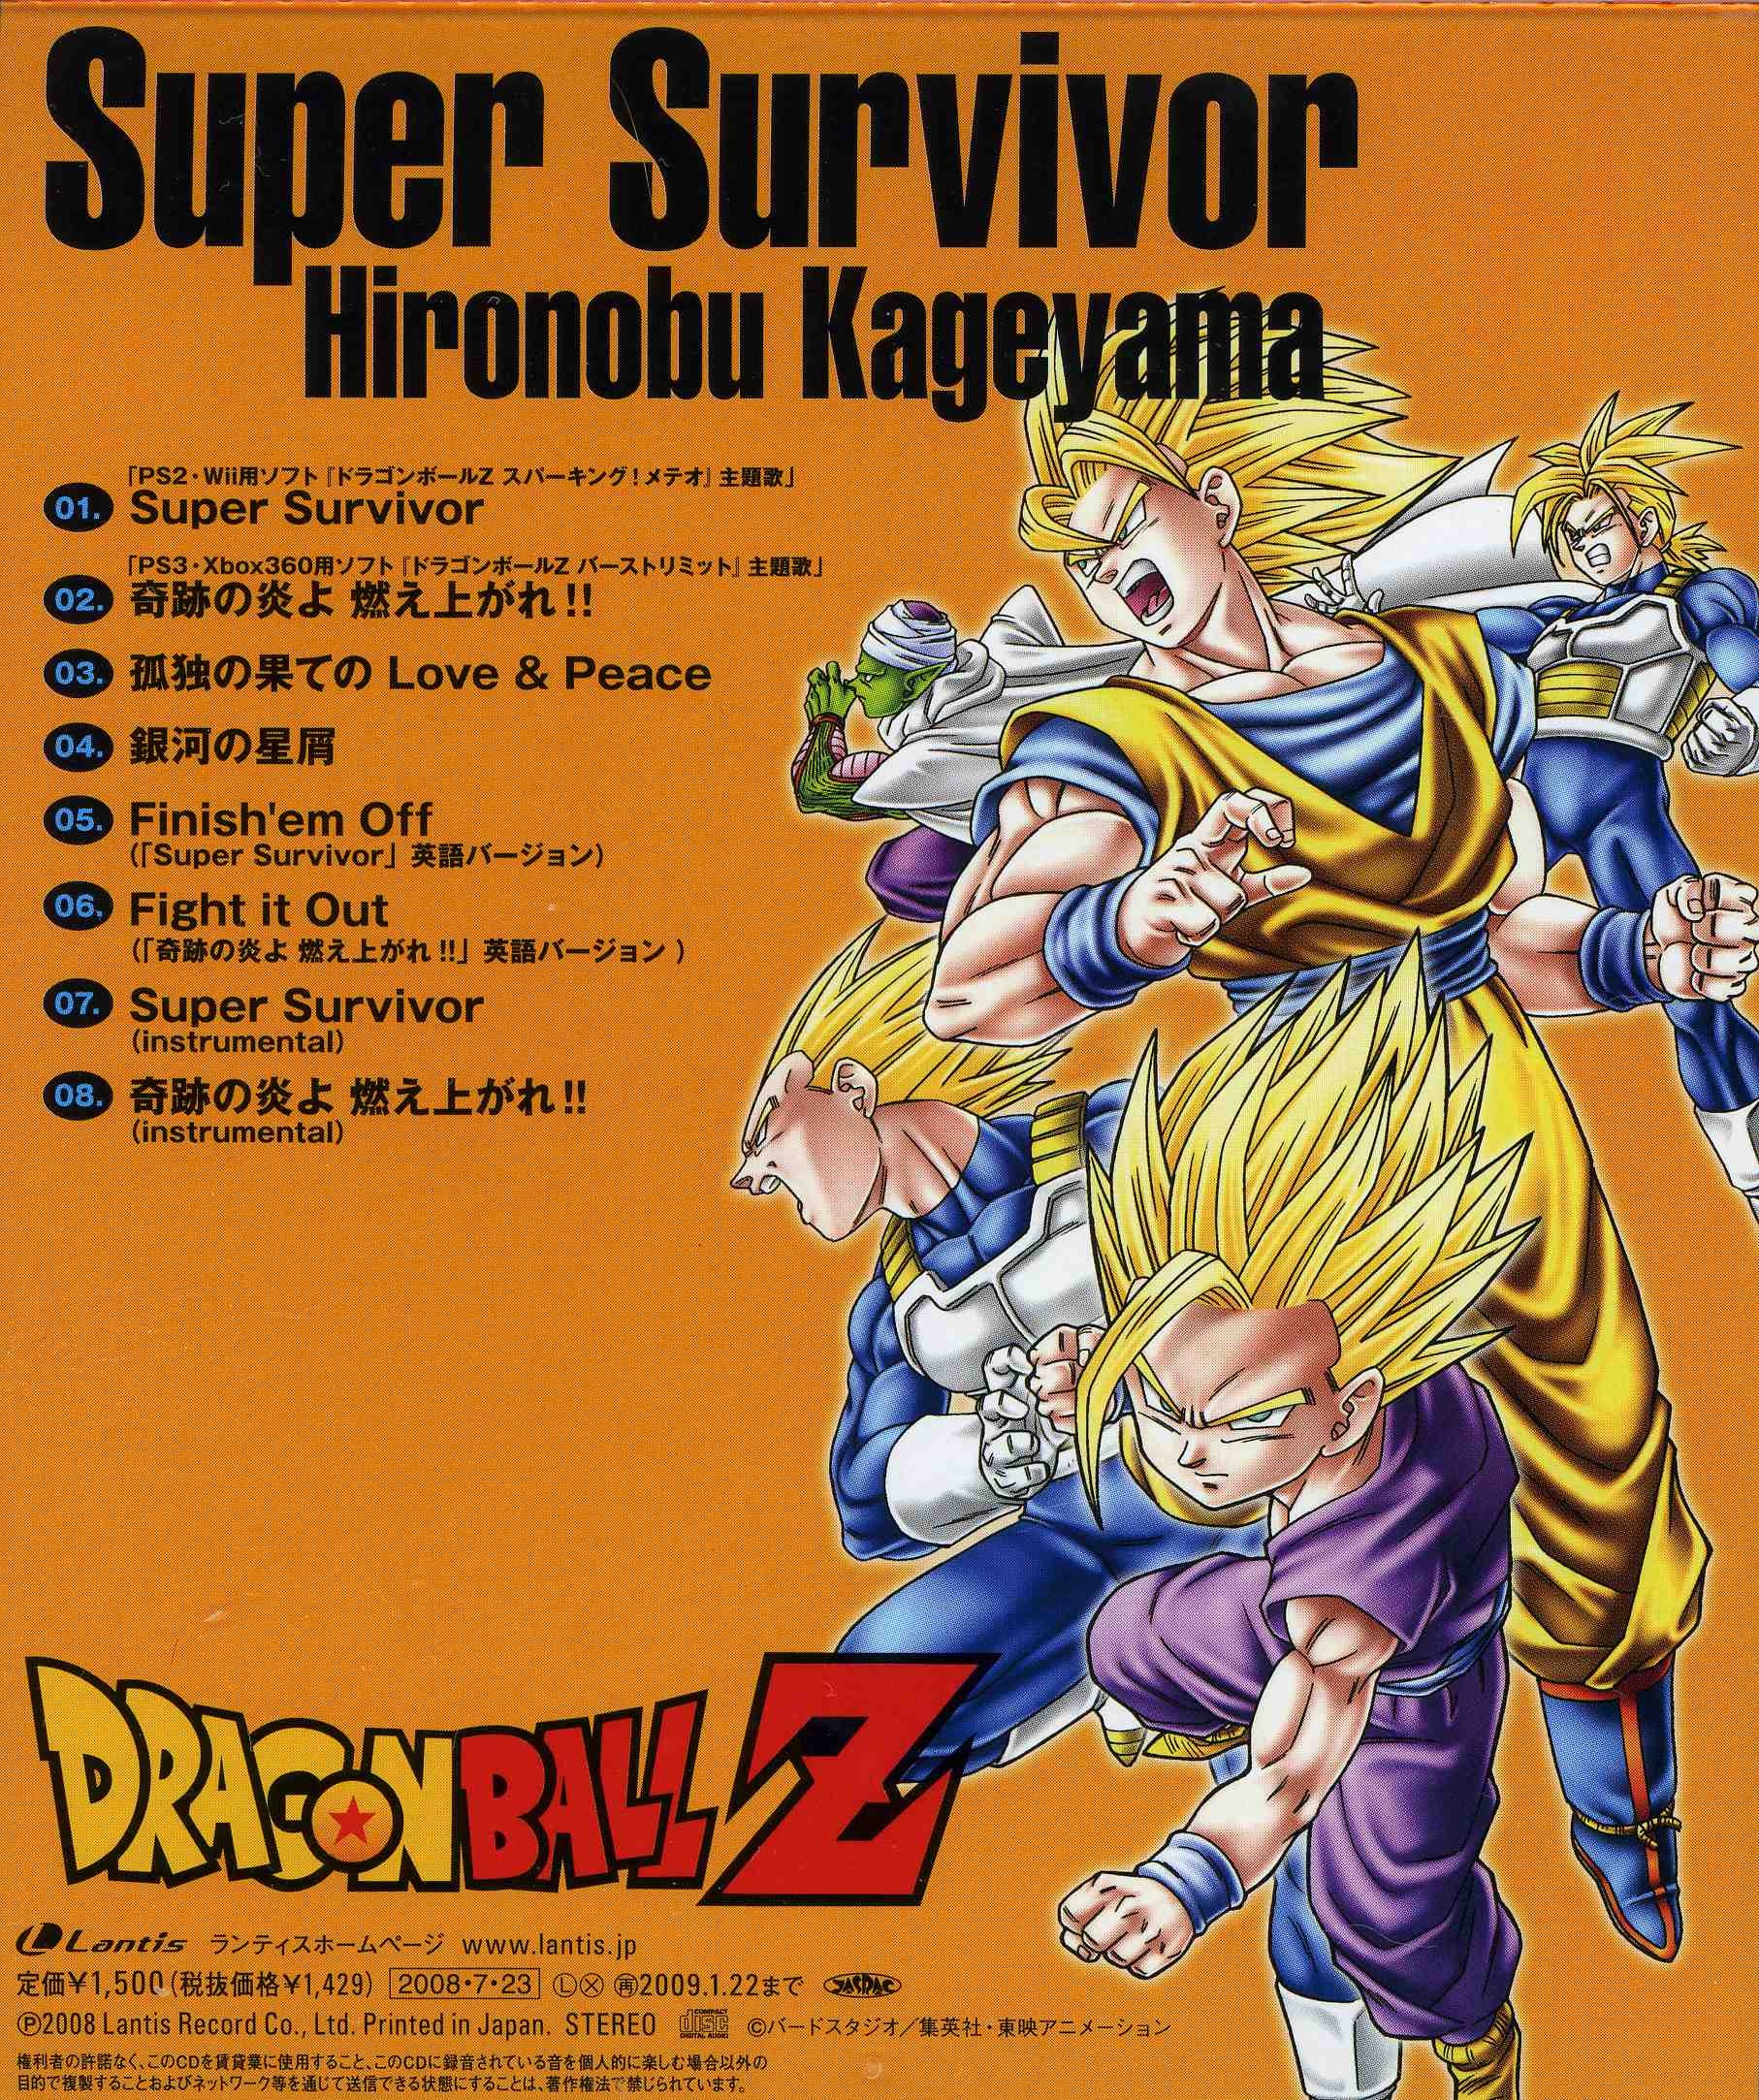 Super Survivor Hironobu Kageyama Dragon Ball Z Mp3 Download Super Survivor Hironobu Kageyama Dragon Ball Z Soundtracks For Free